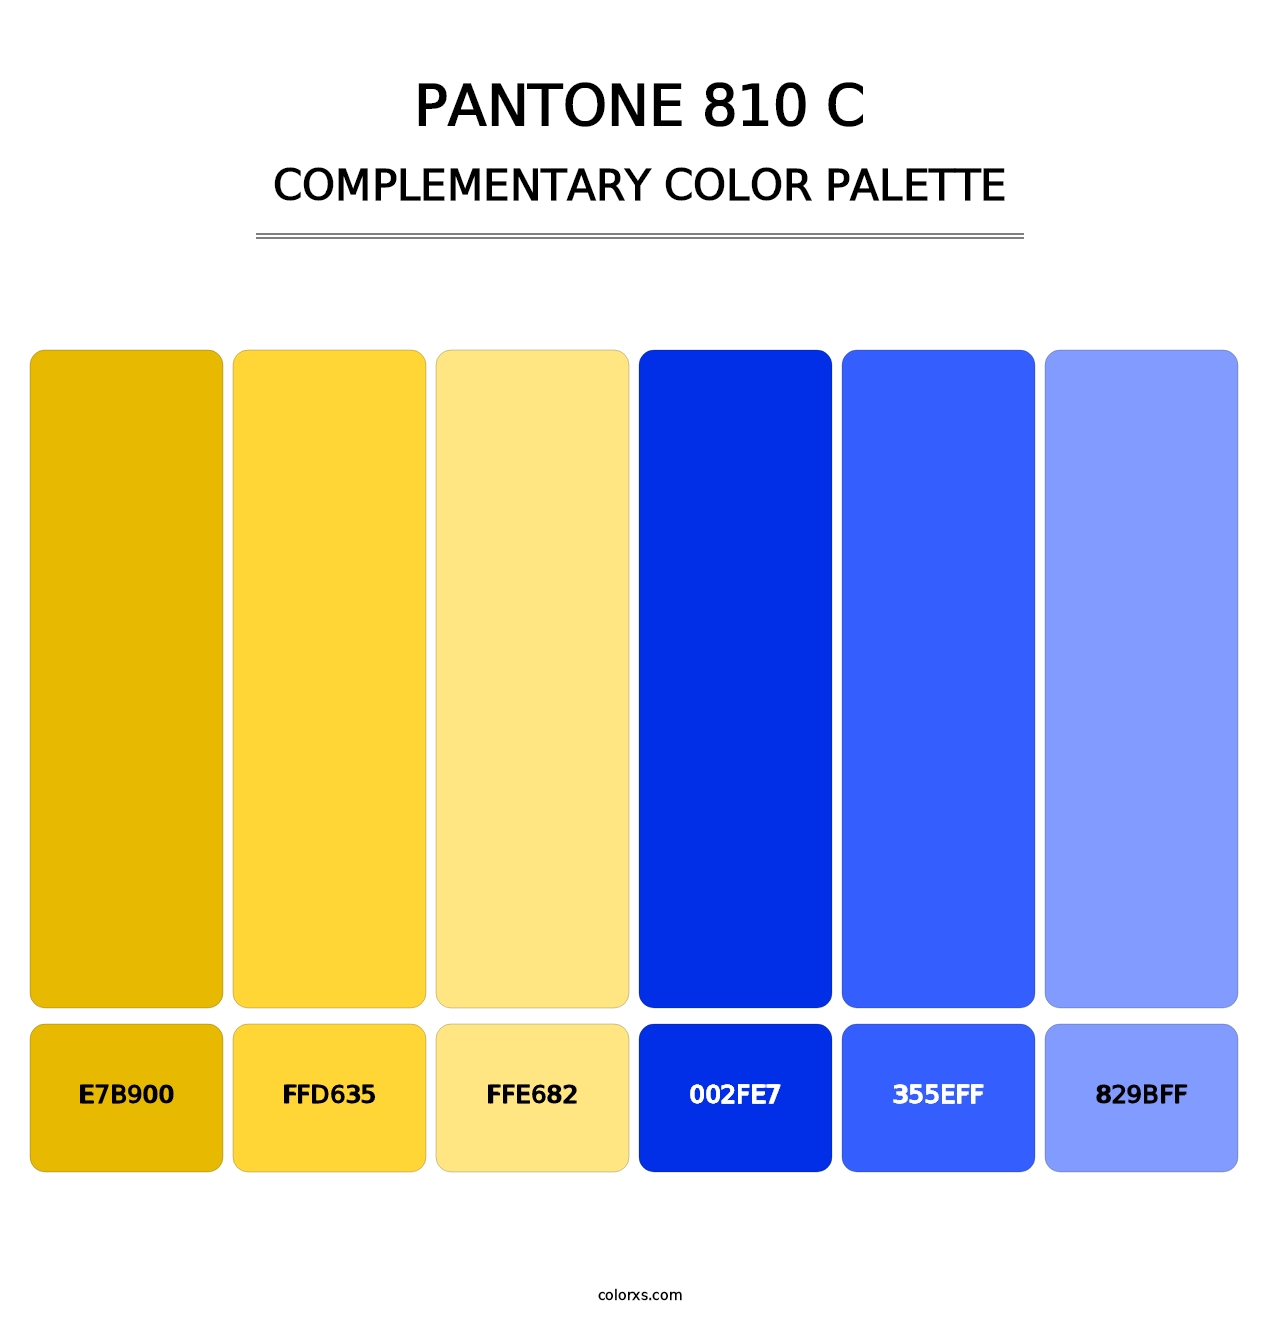 PANTONE 810 C - Complementary Color Palette